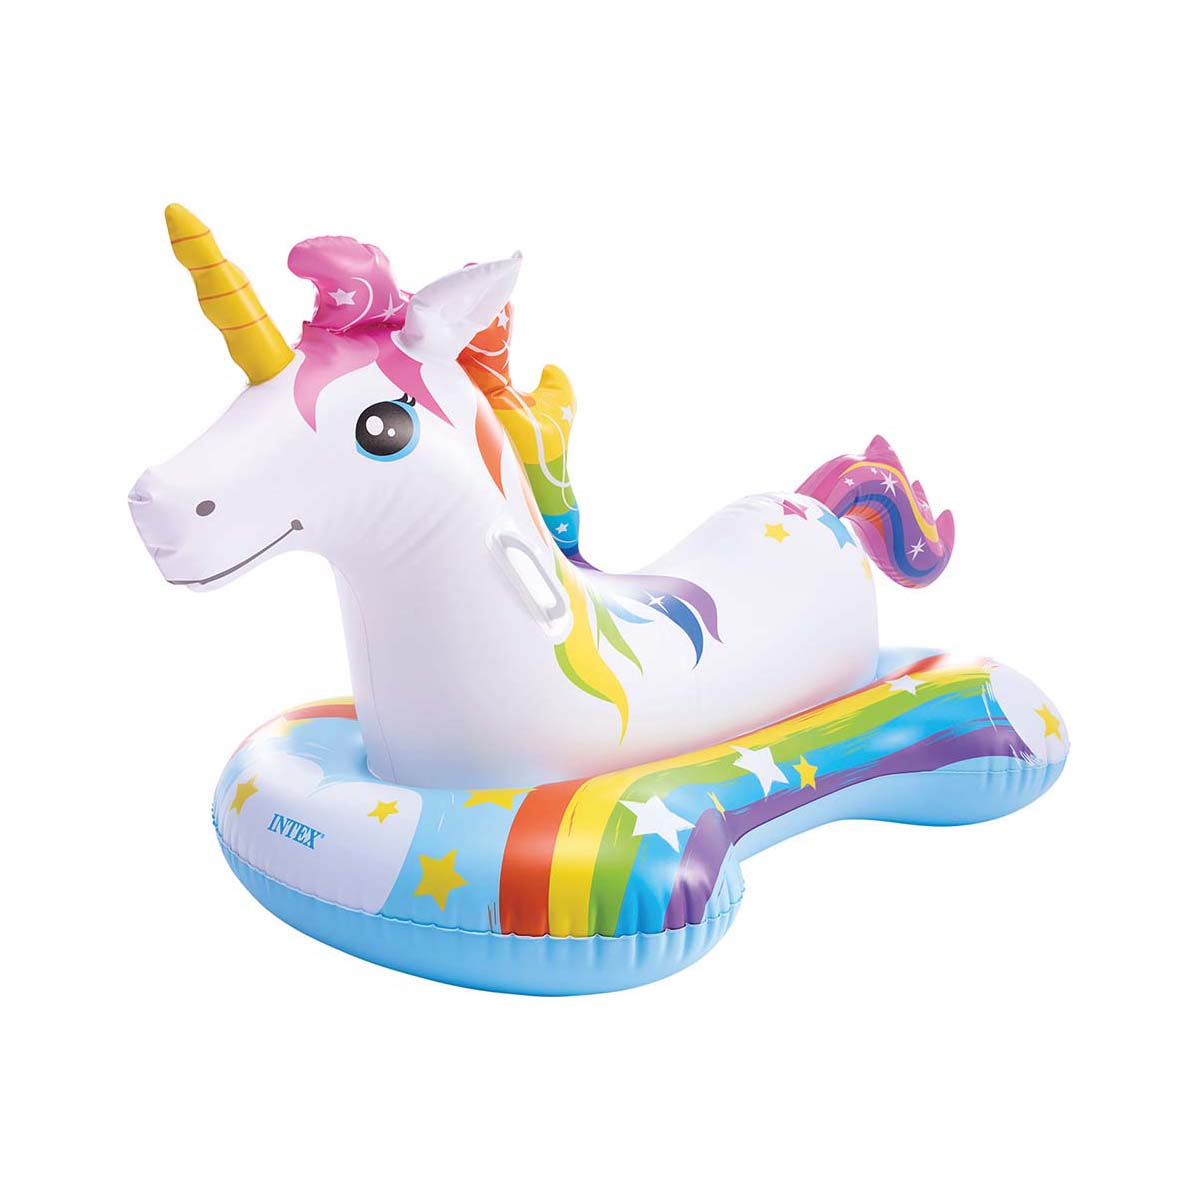 Intex Inflatable Ride On Unicorn